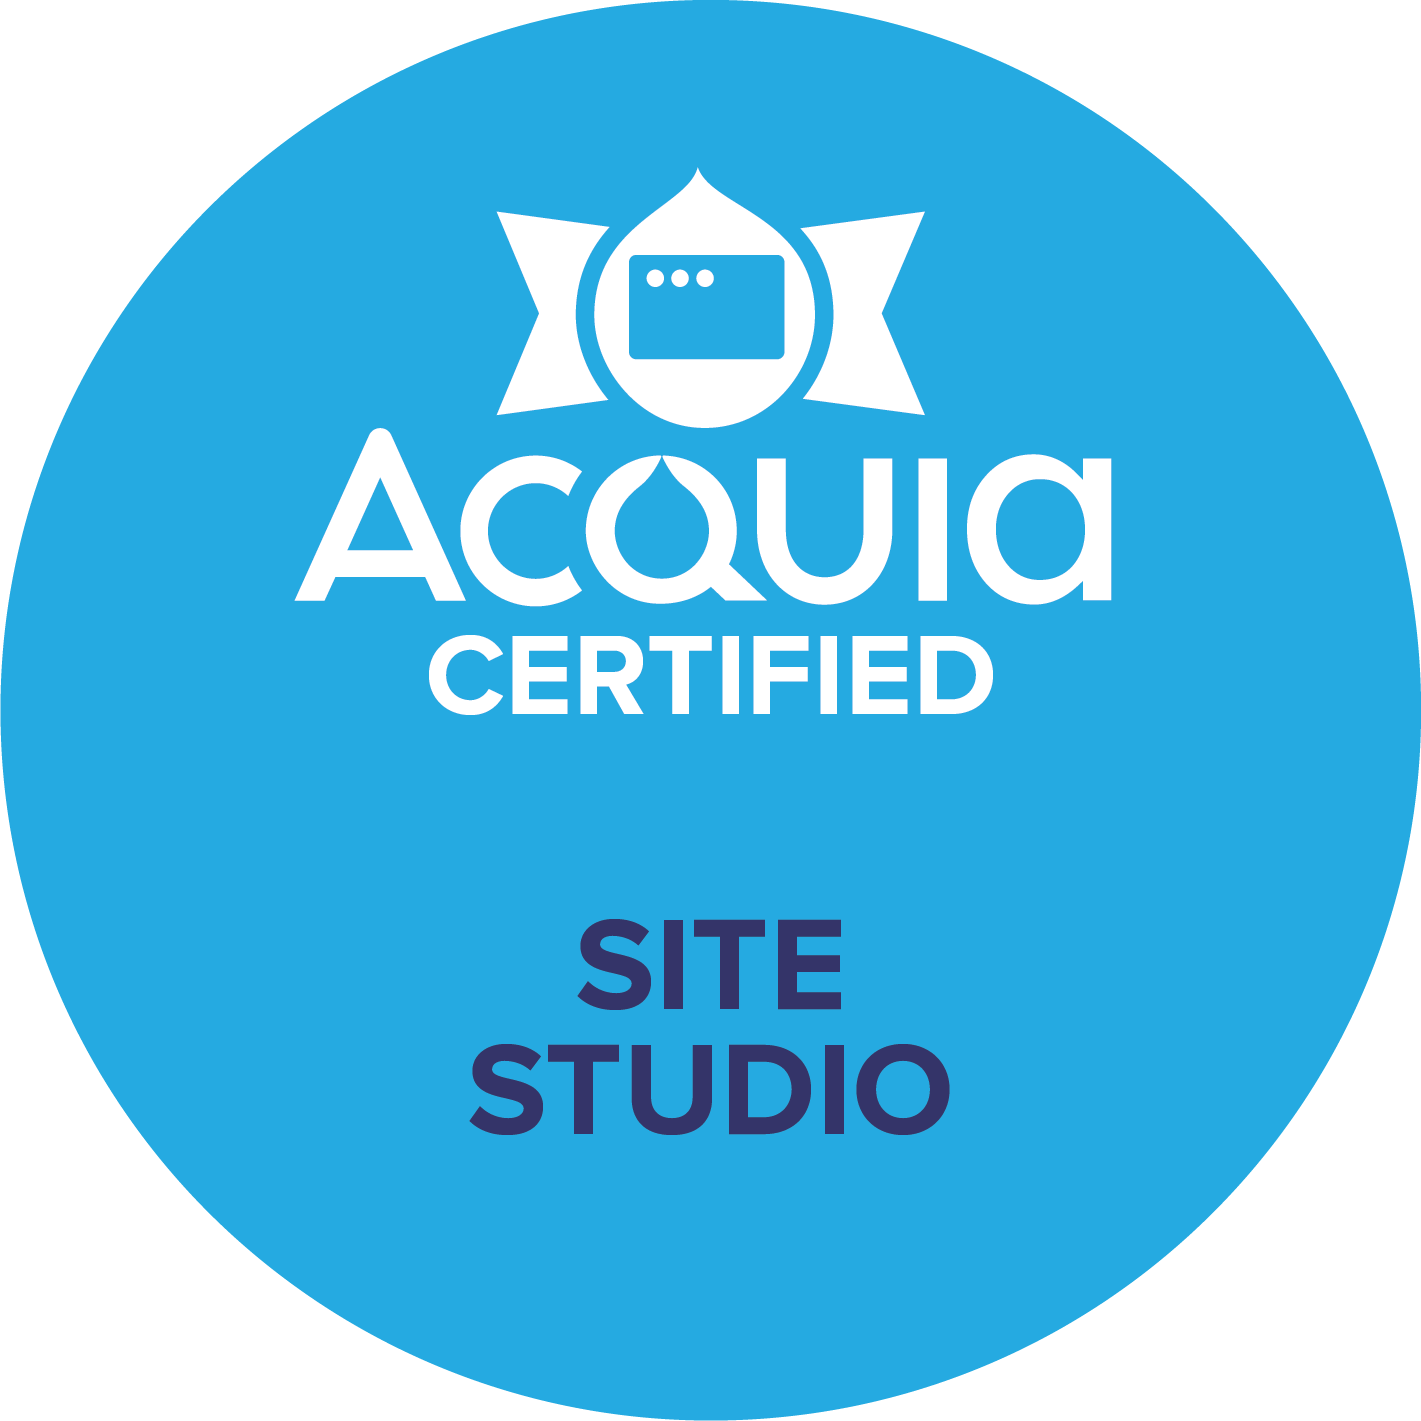 Acquia certified site studio